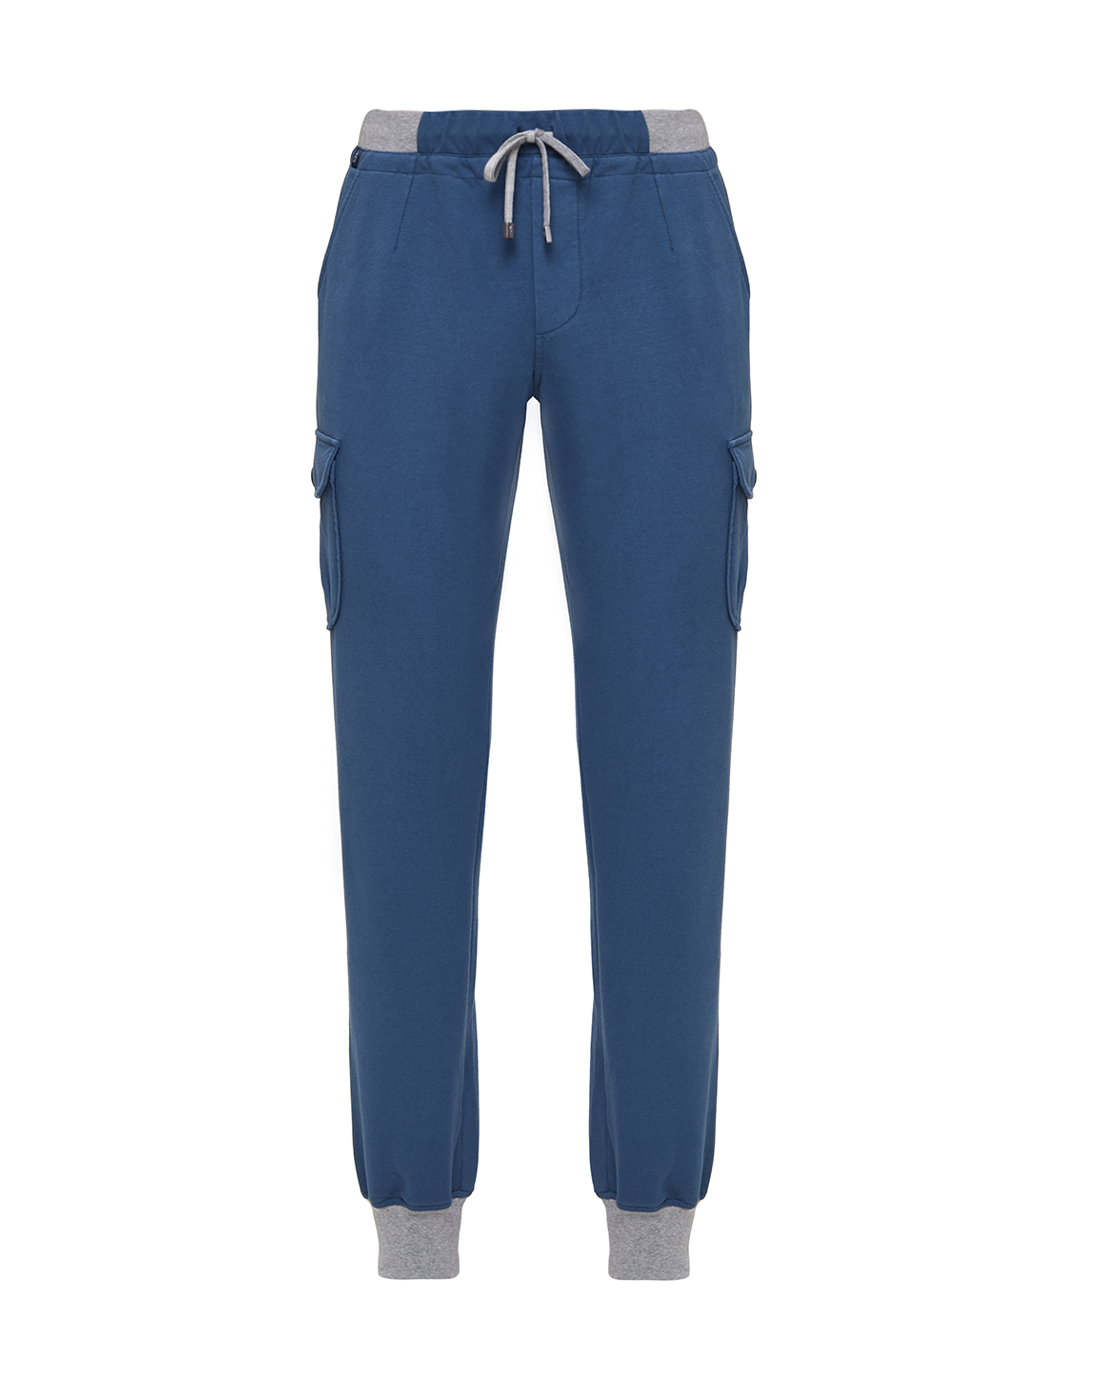 Мужские синие спортивные брюки Capobianco S10M737.FE01.JEANS-1